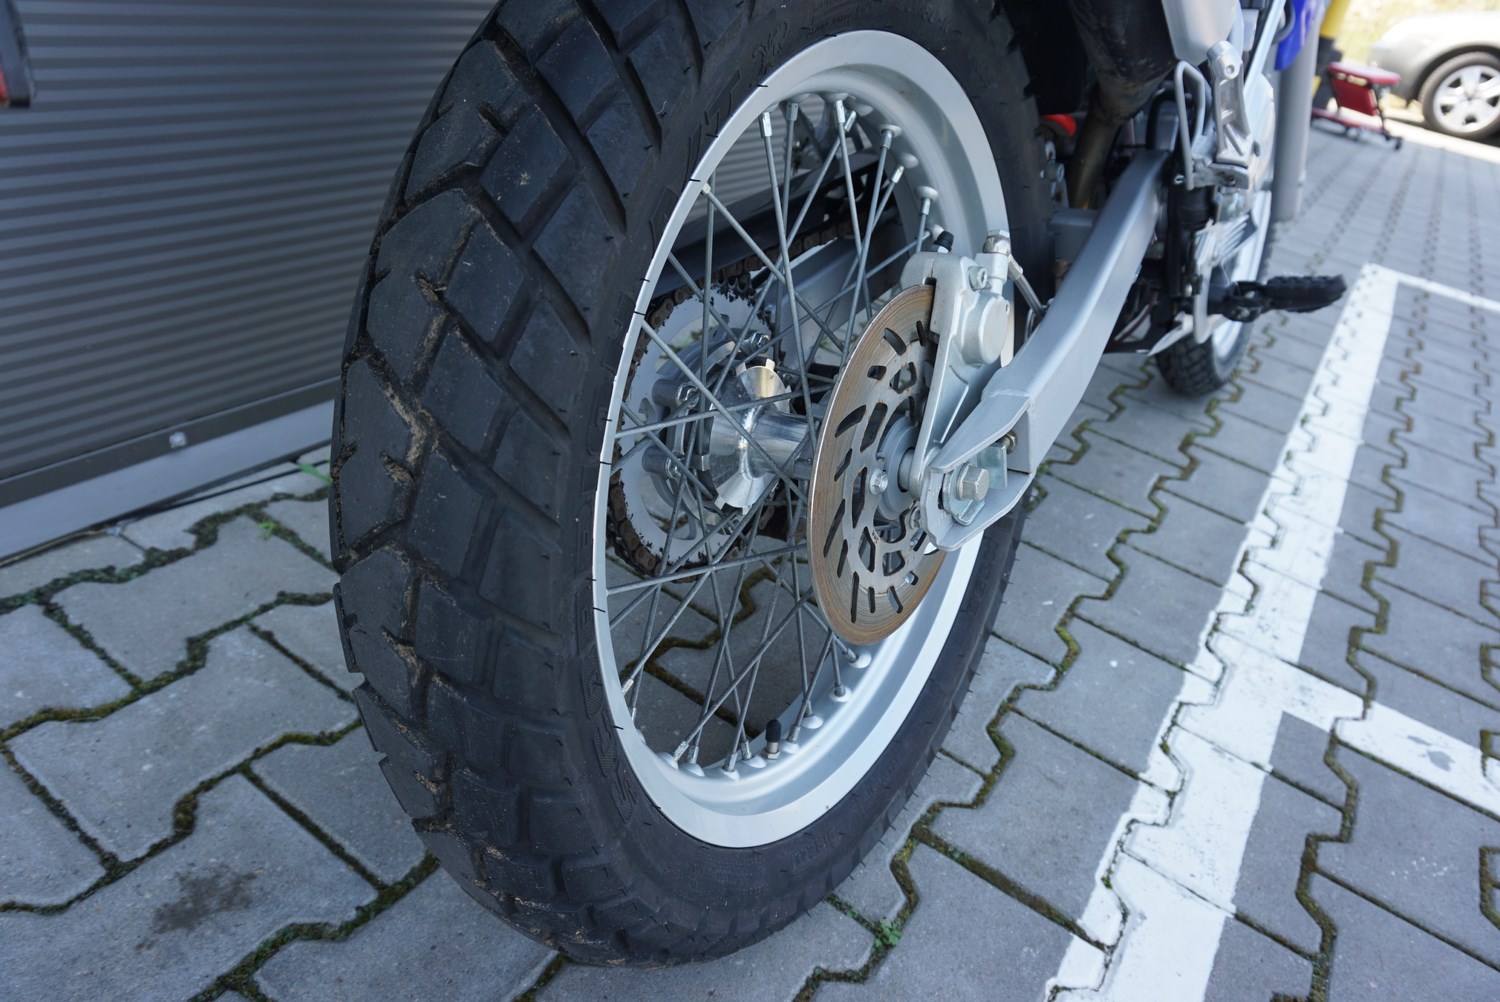 Yamaha XT 125 R